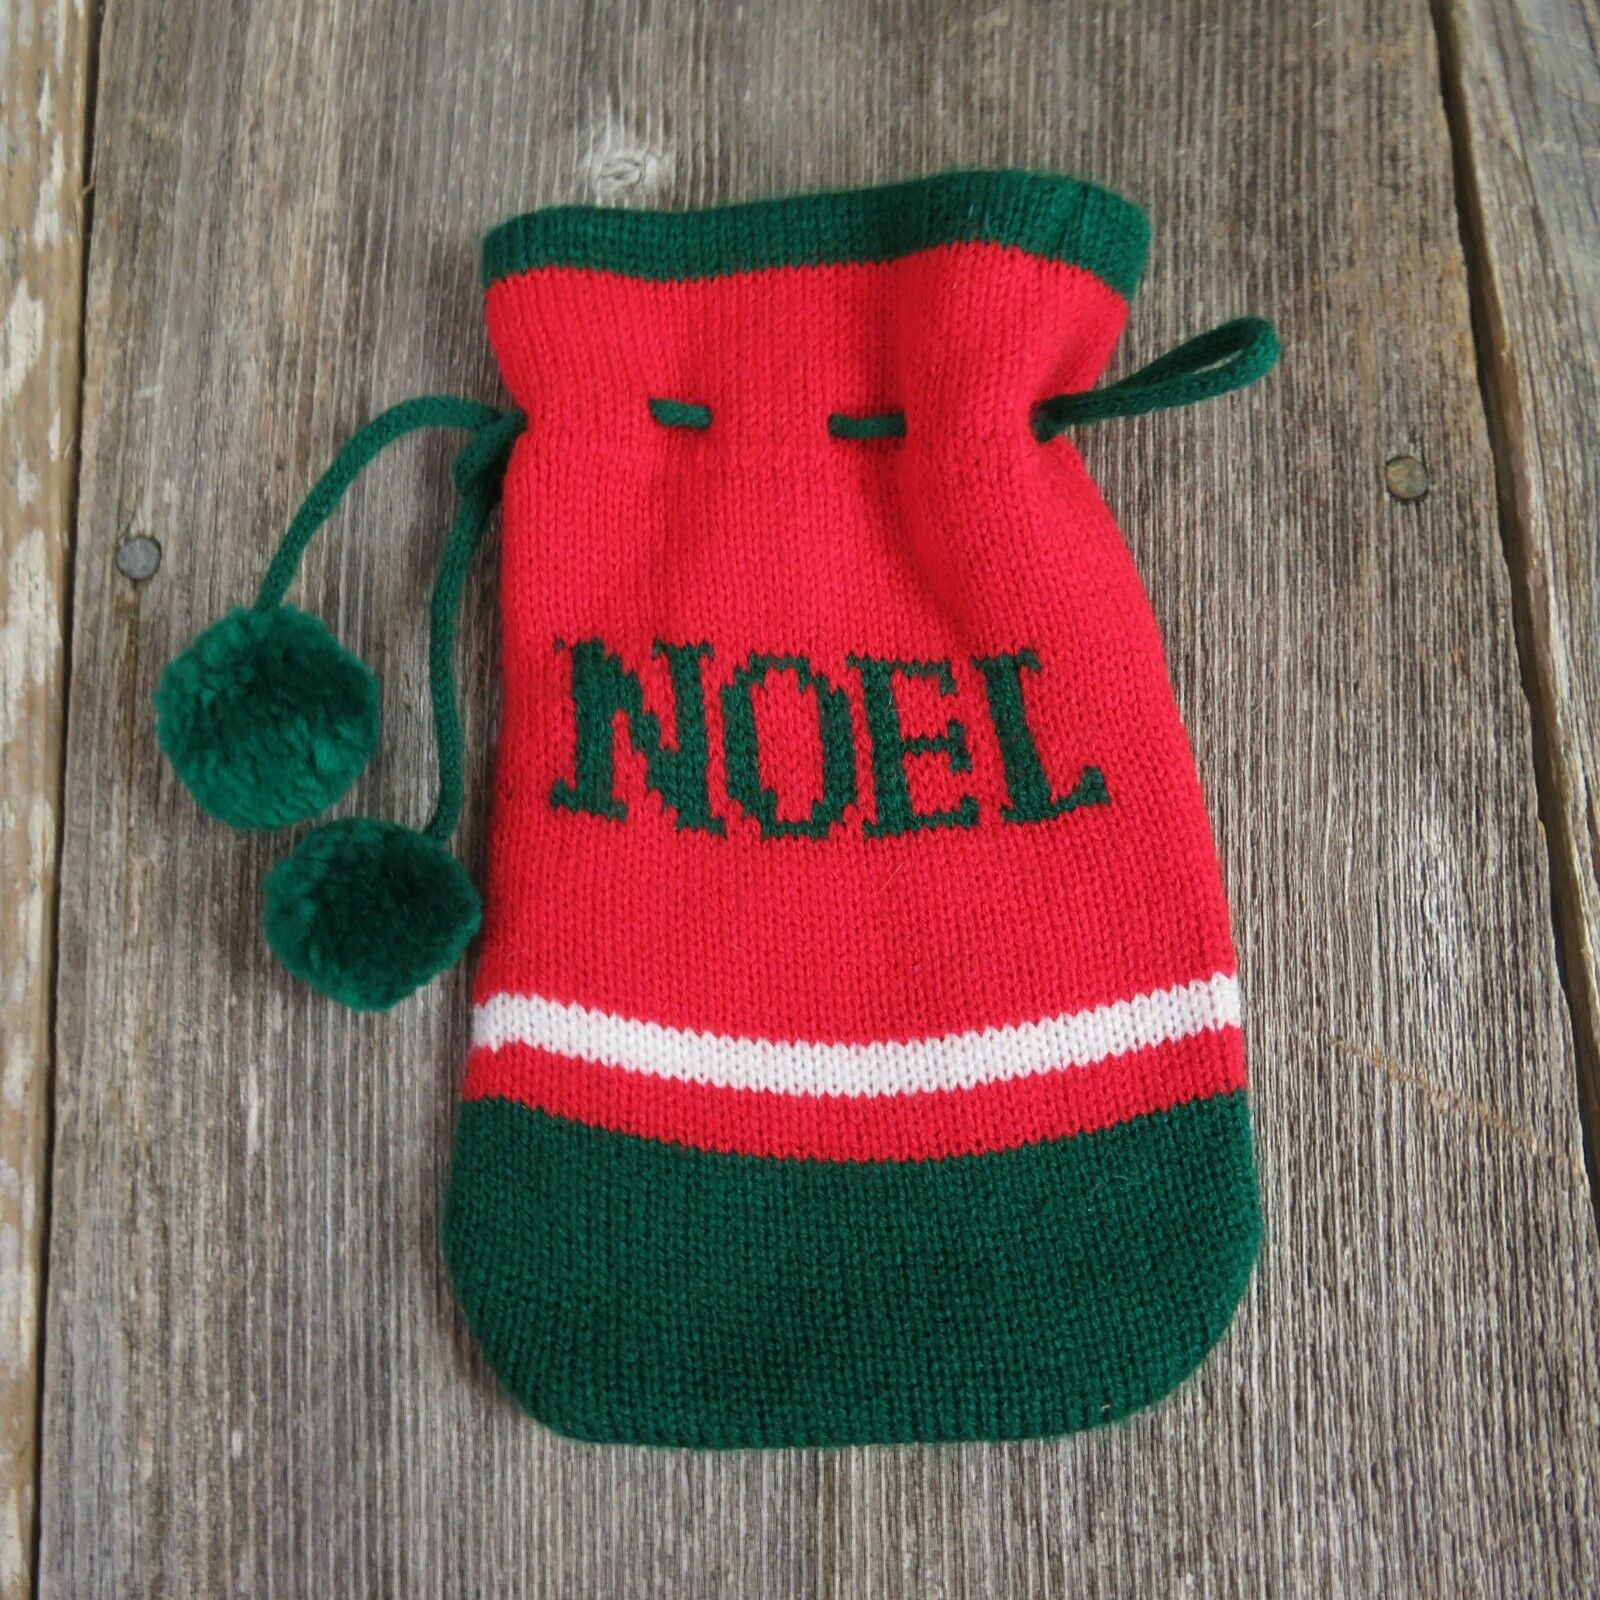 Vintage Noel Striped Santa Sack Bag Stocking Knit Christmas Green Red White st42 - At Grandma's Table